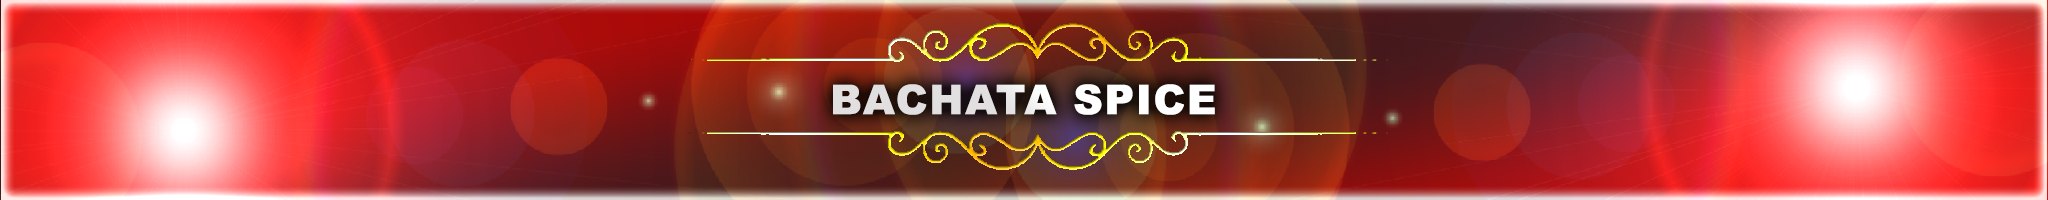 Bachata Spice Footer Logo